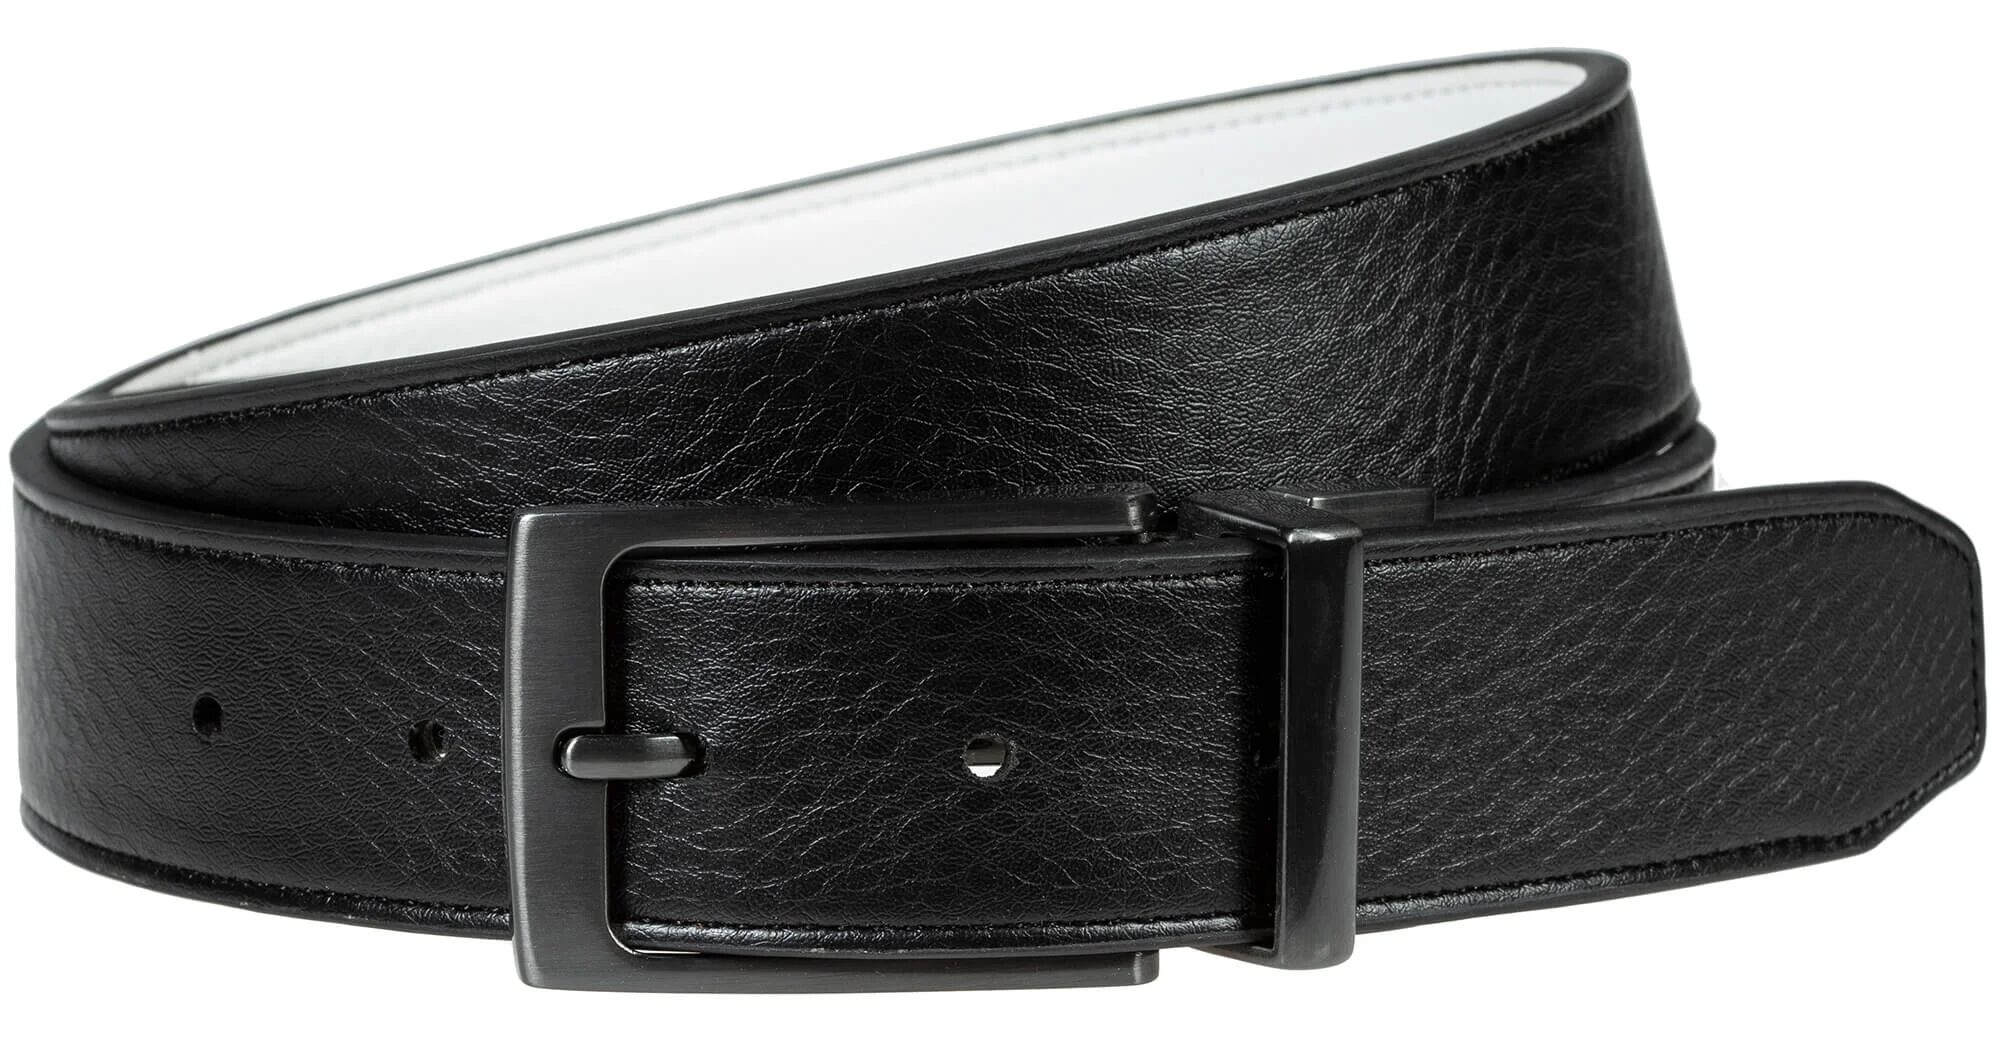 Nike Men's Golf Edge Stitch Reversible Leather Belt - Black, Size: 36